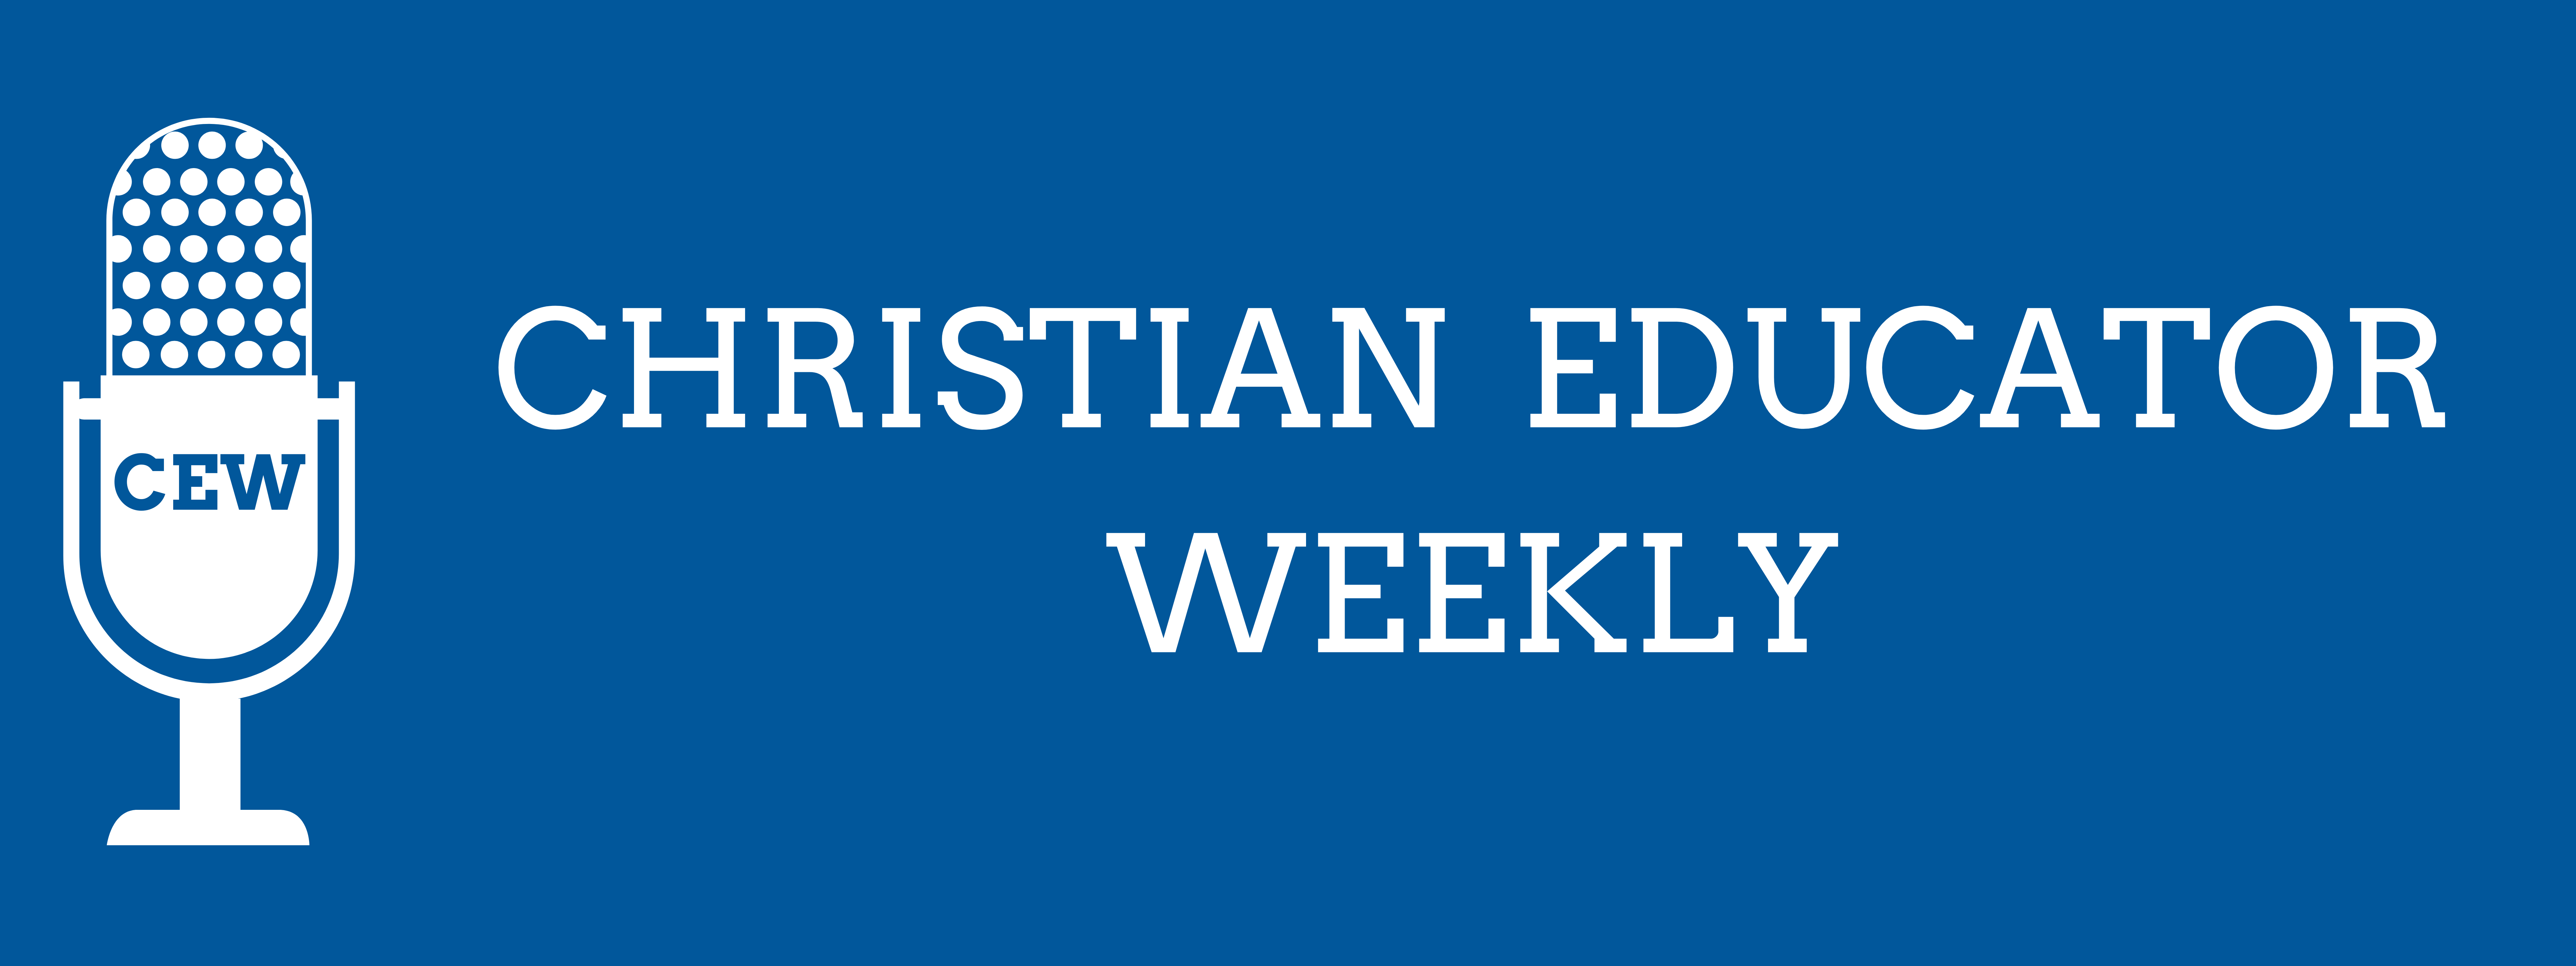 Christian Educator Weekly